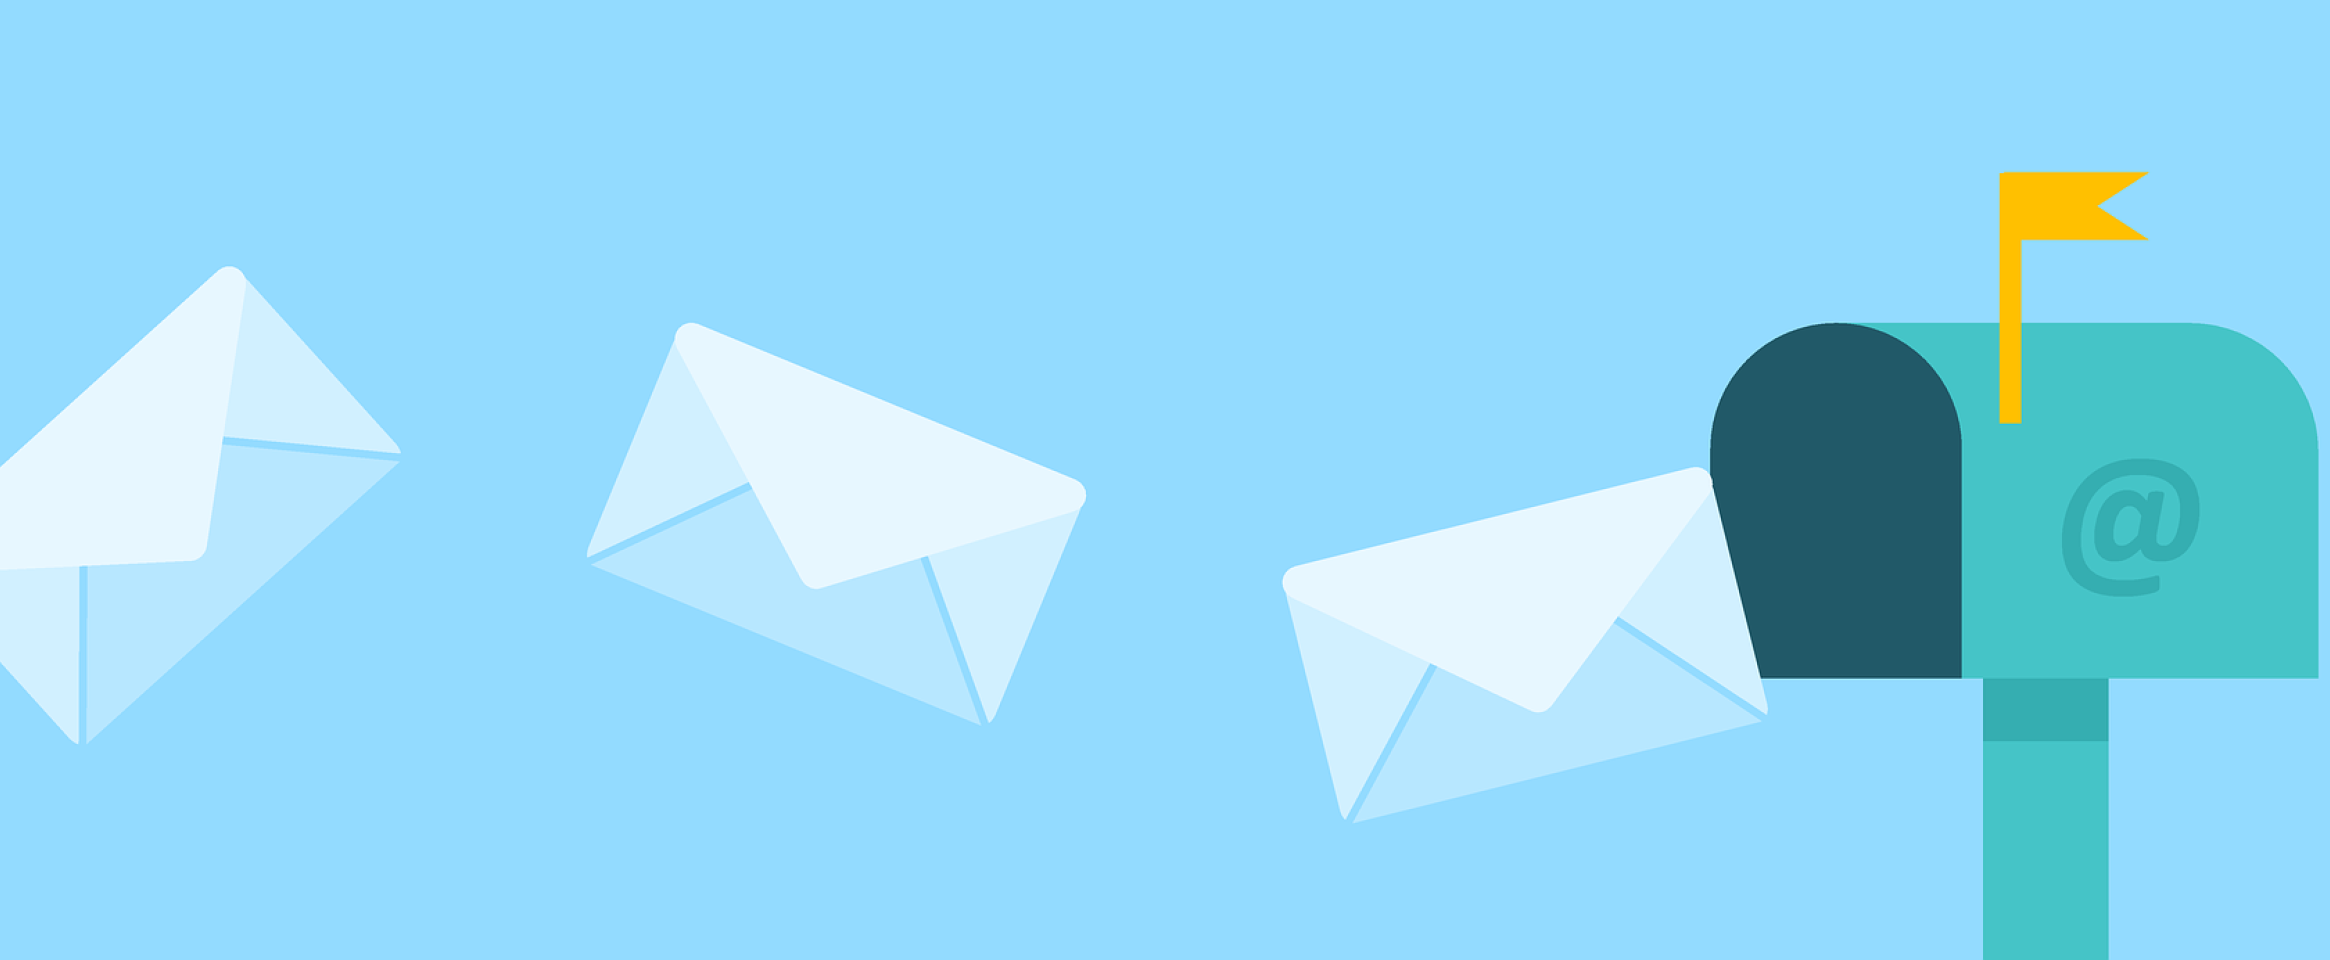 Stock illustration showing envelopes floating towards an open mailbox.